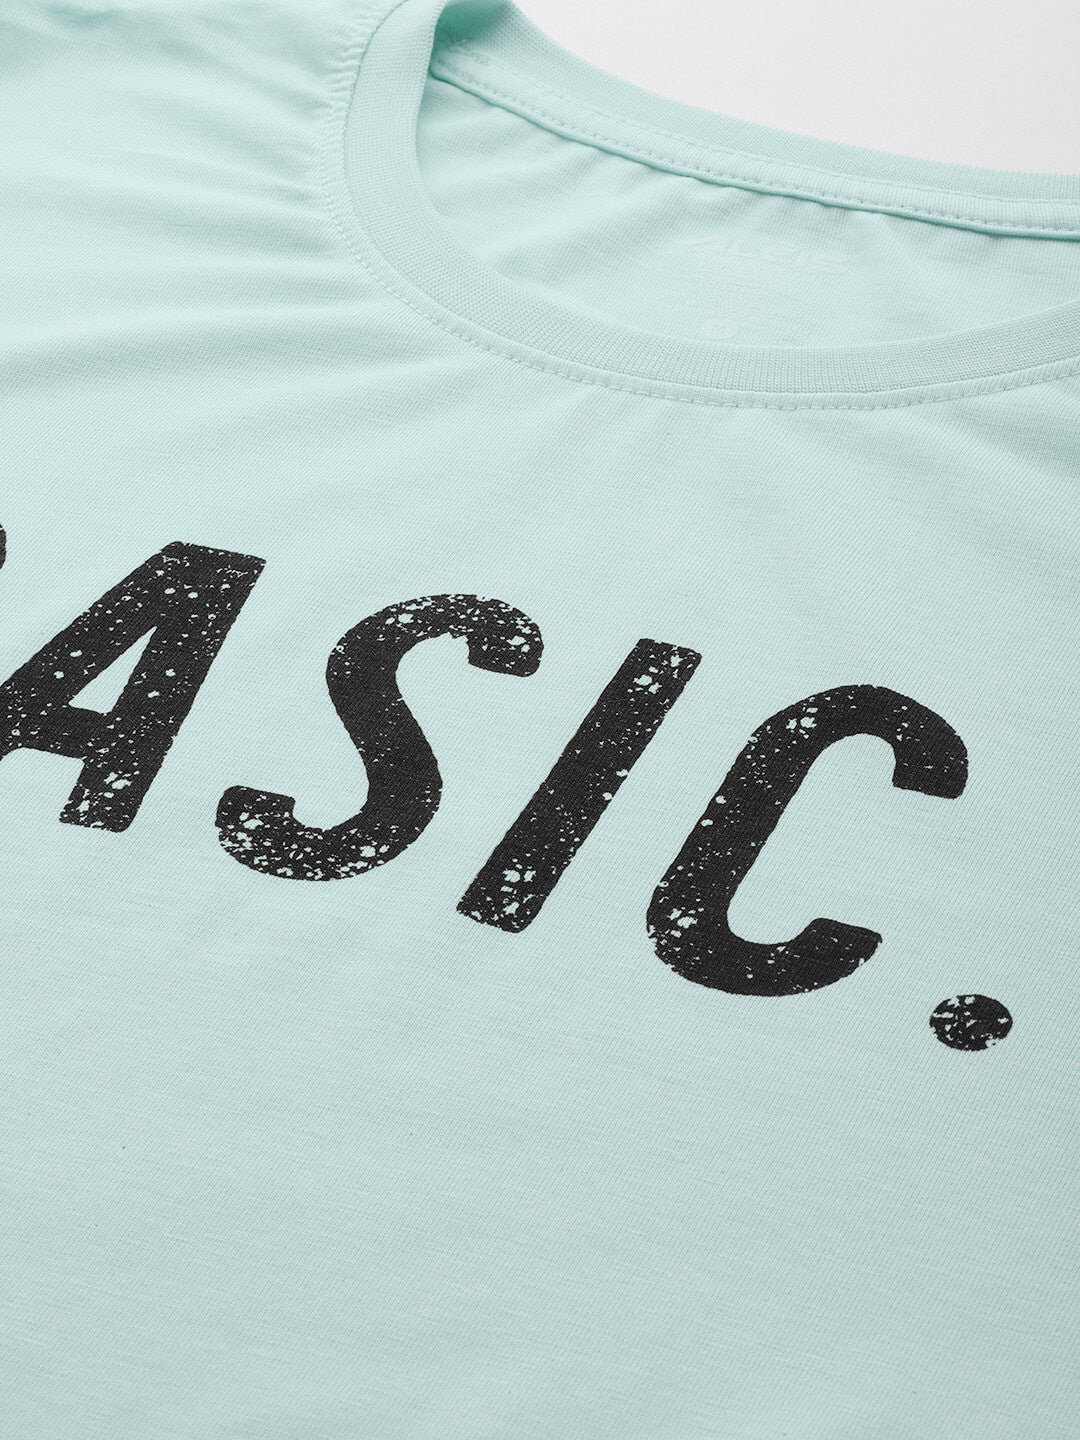 Alcis Men Typography Printed Anti Static T-shirt